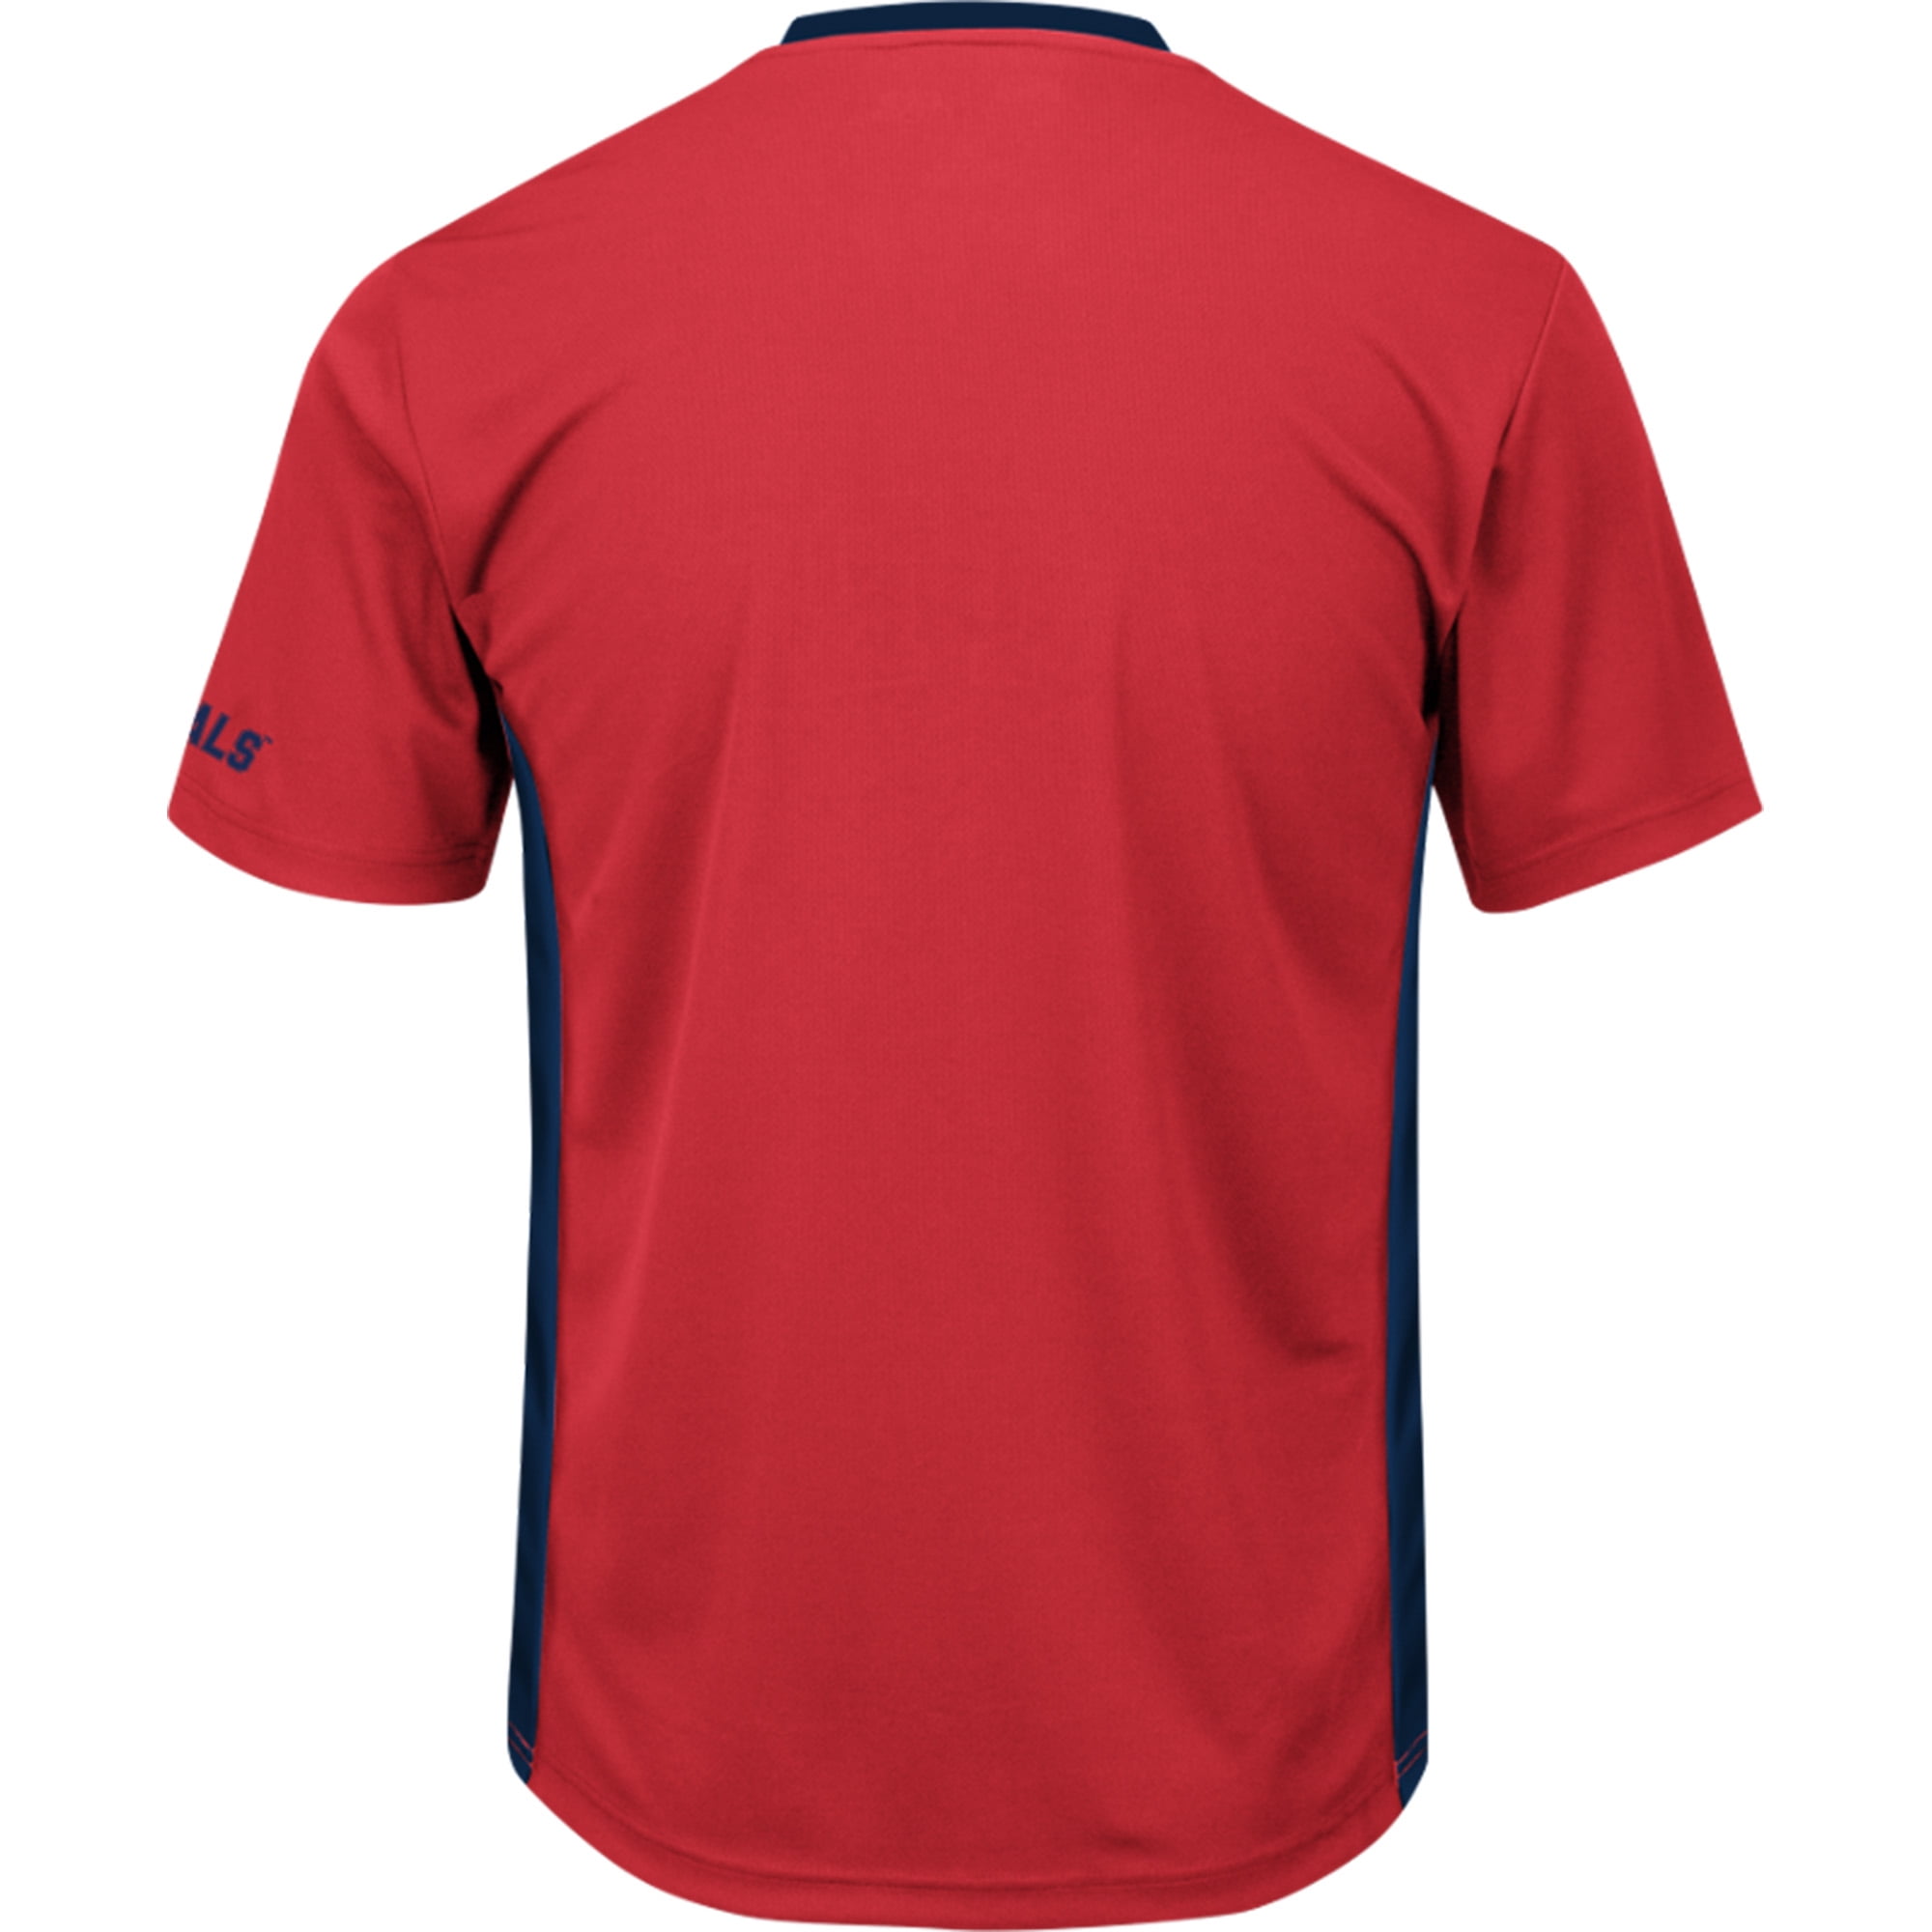 red atlanta braves shirt